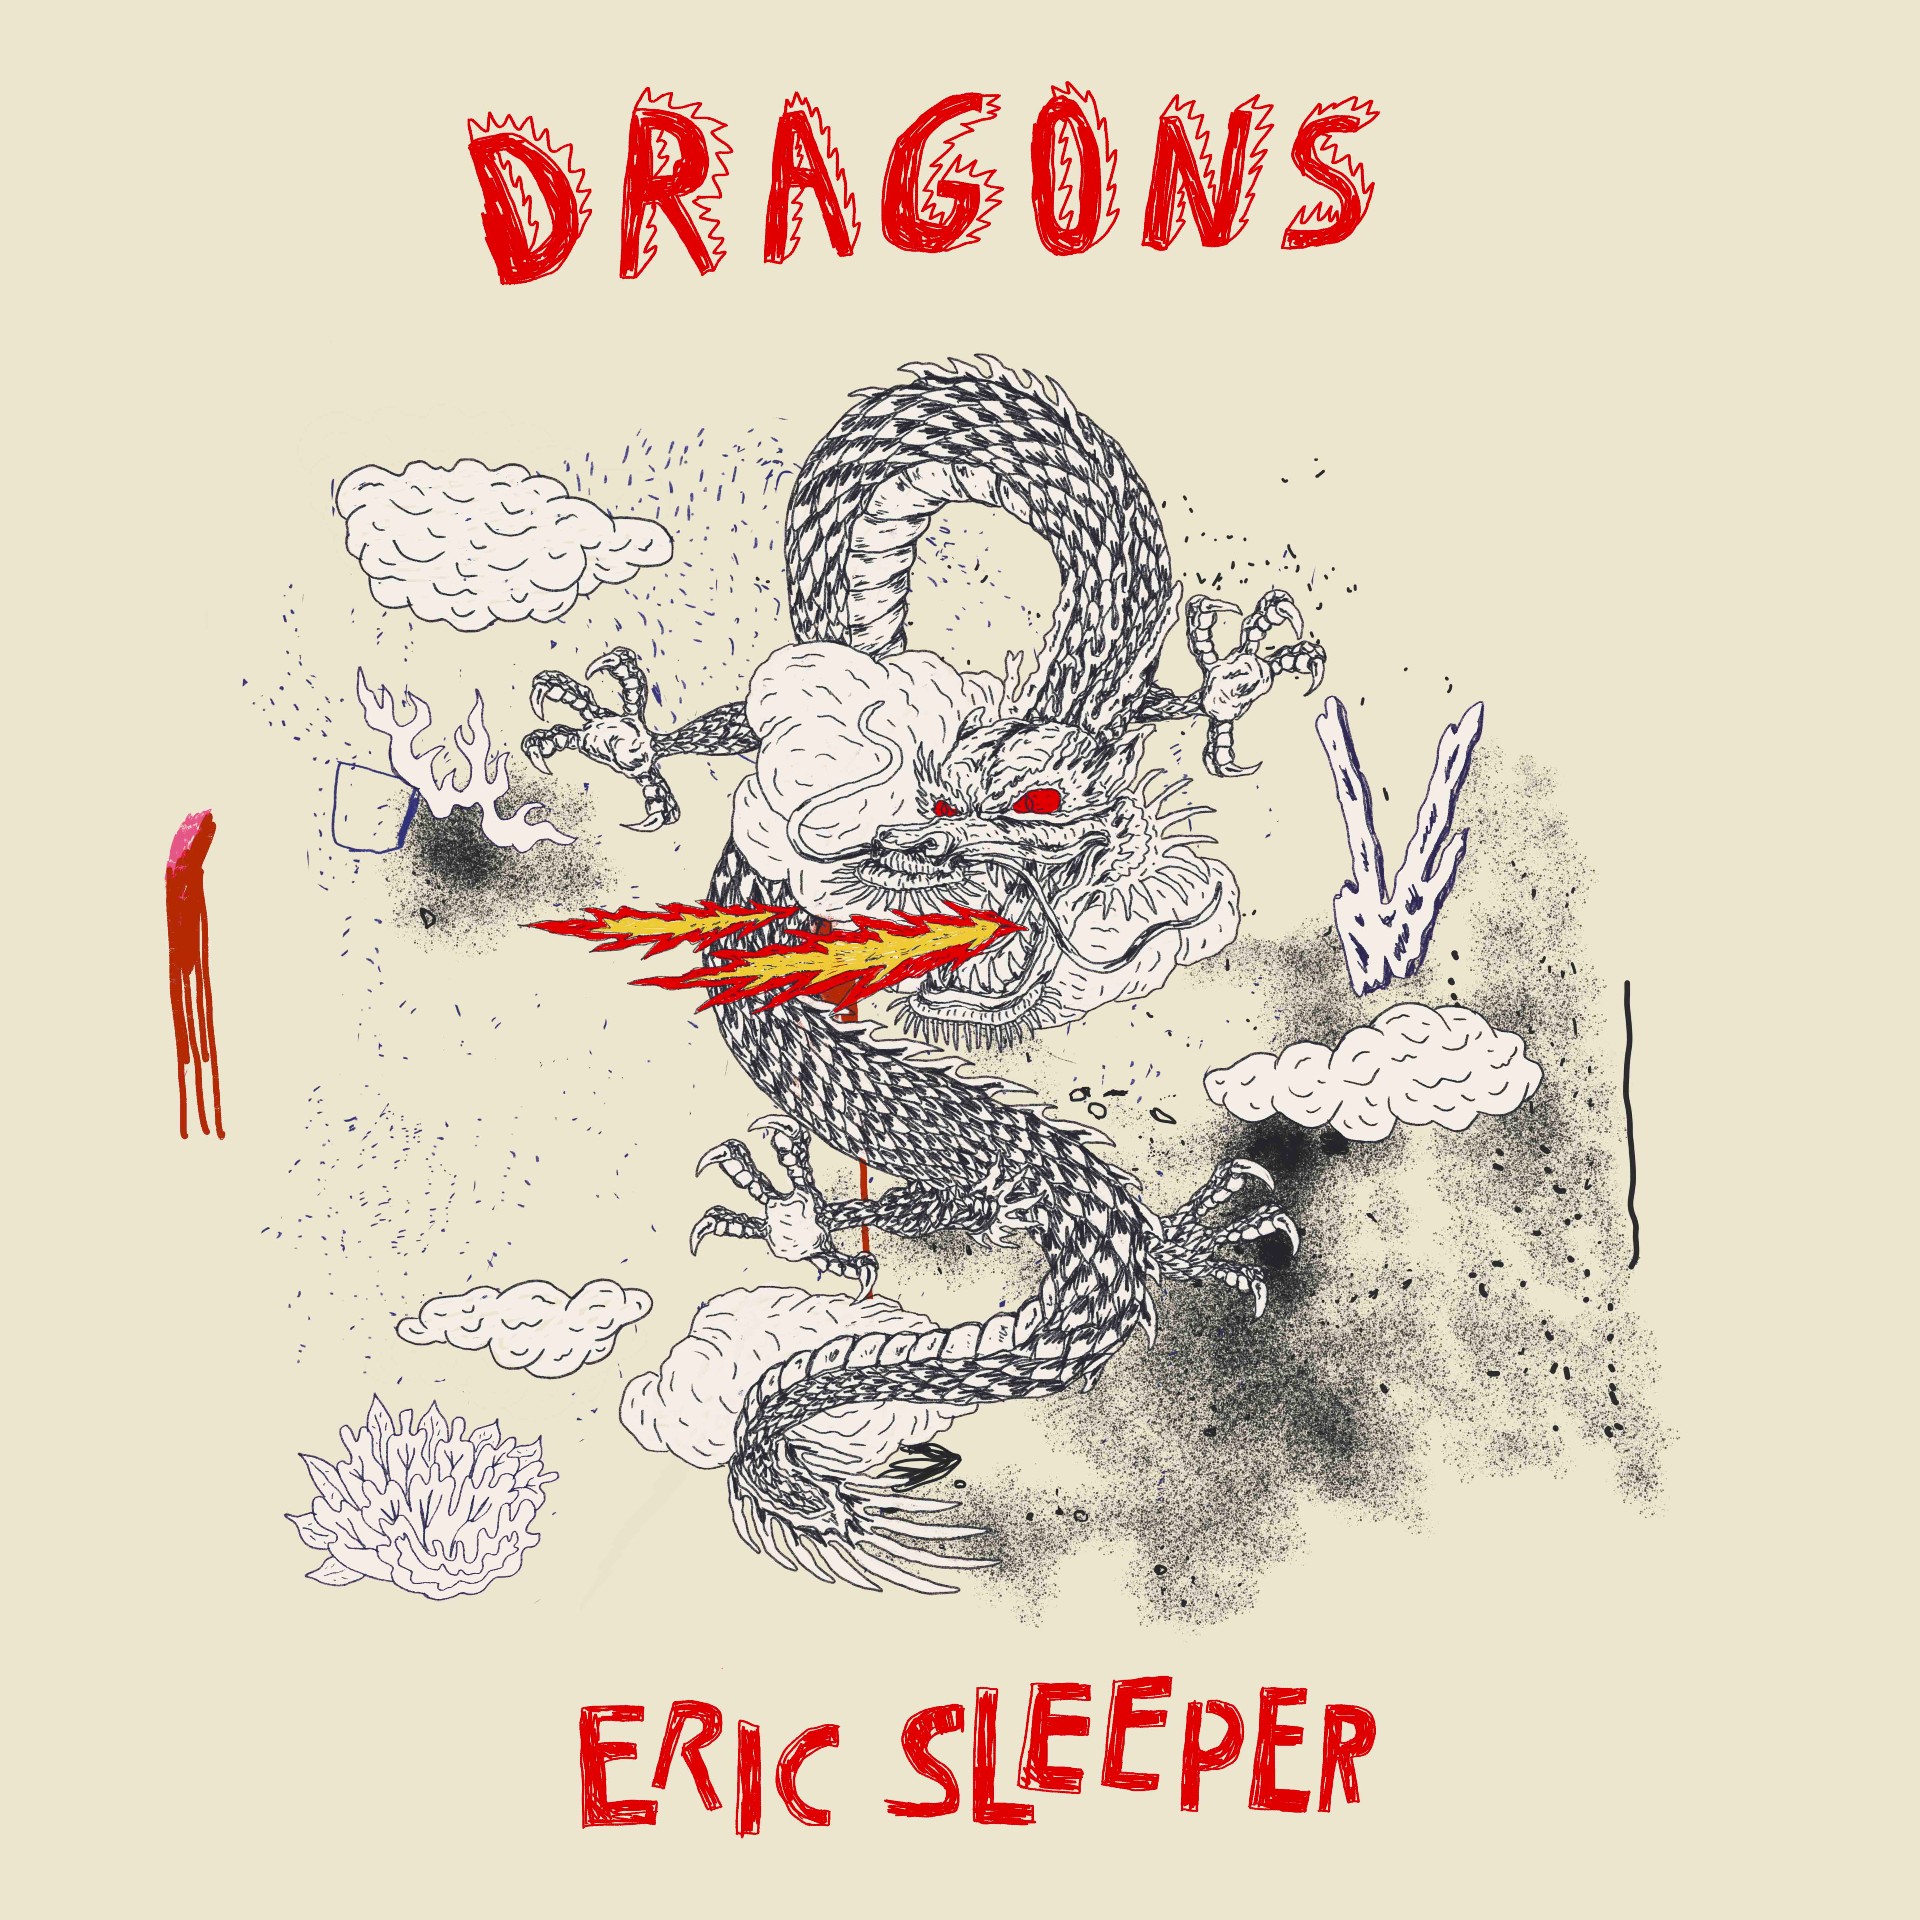 Eric Sleeper “Dragons” single artwork